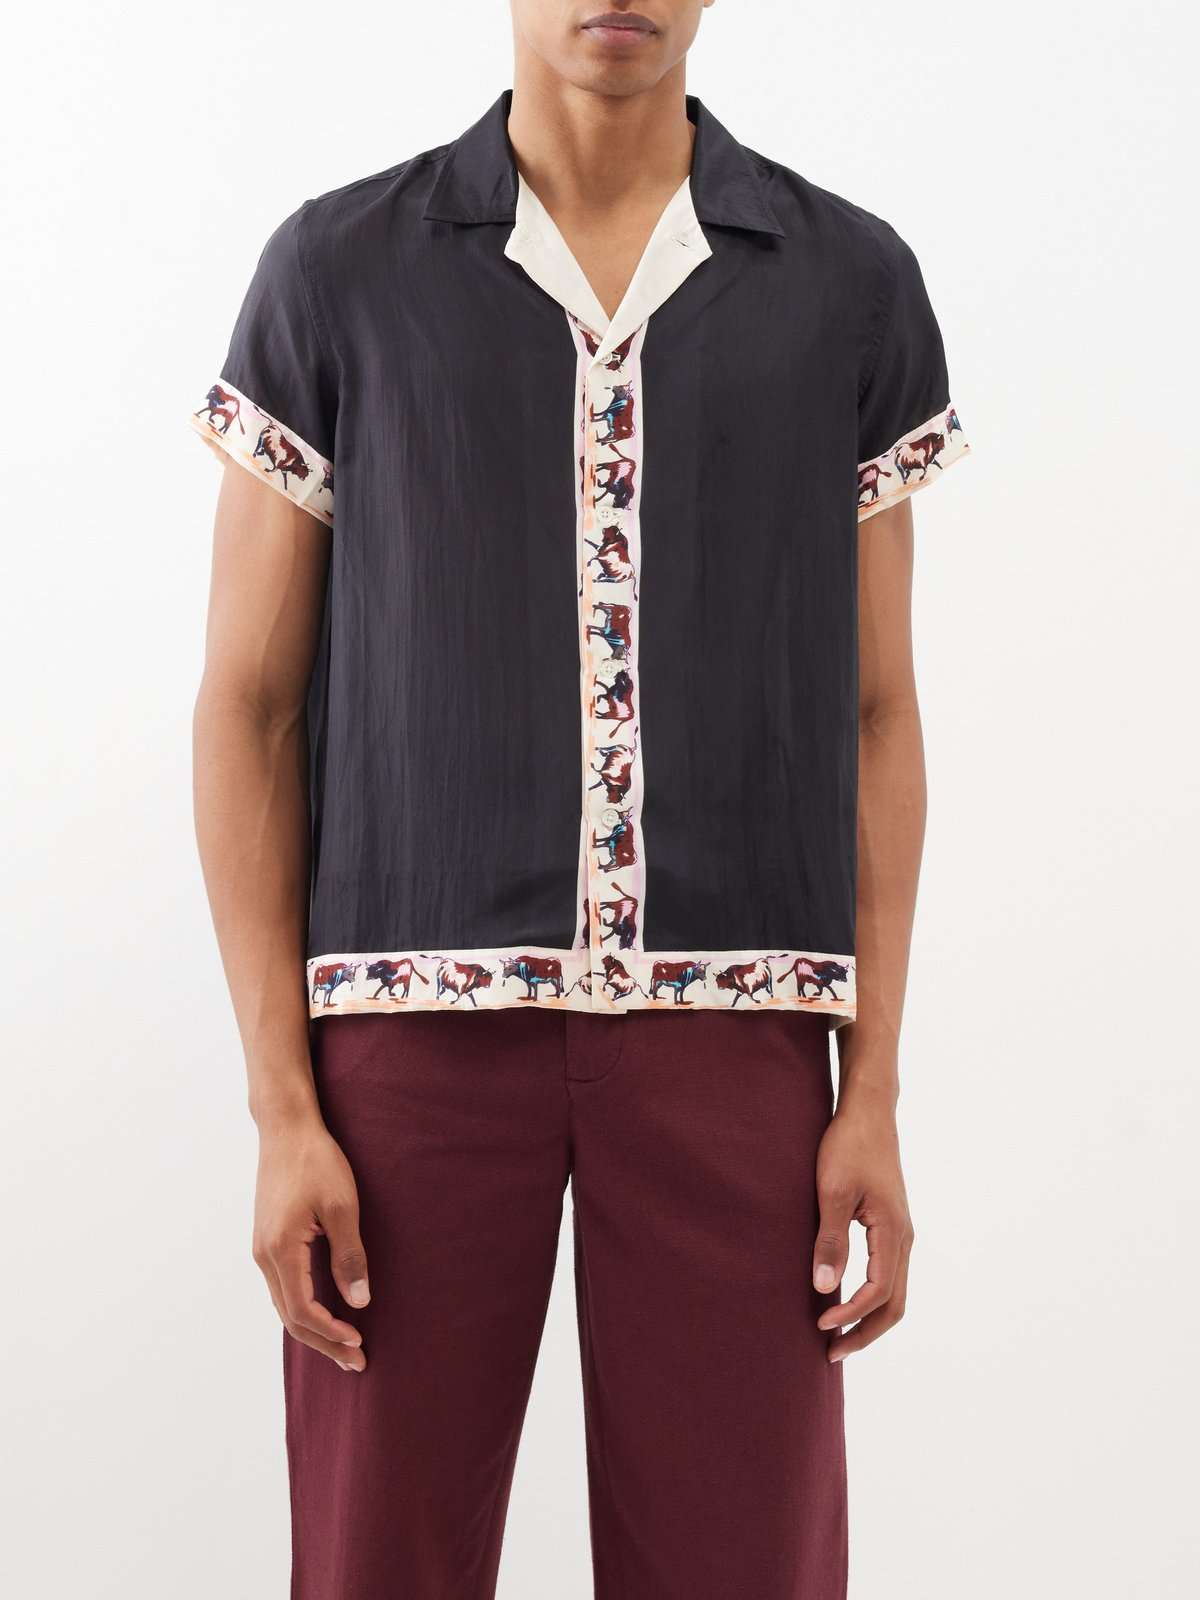 шелковая рубашка Taureau с короткими рукавами